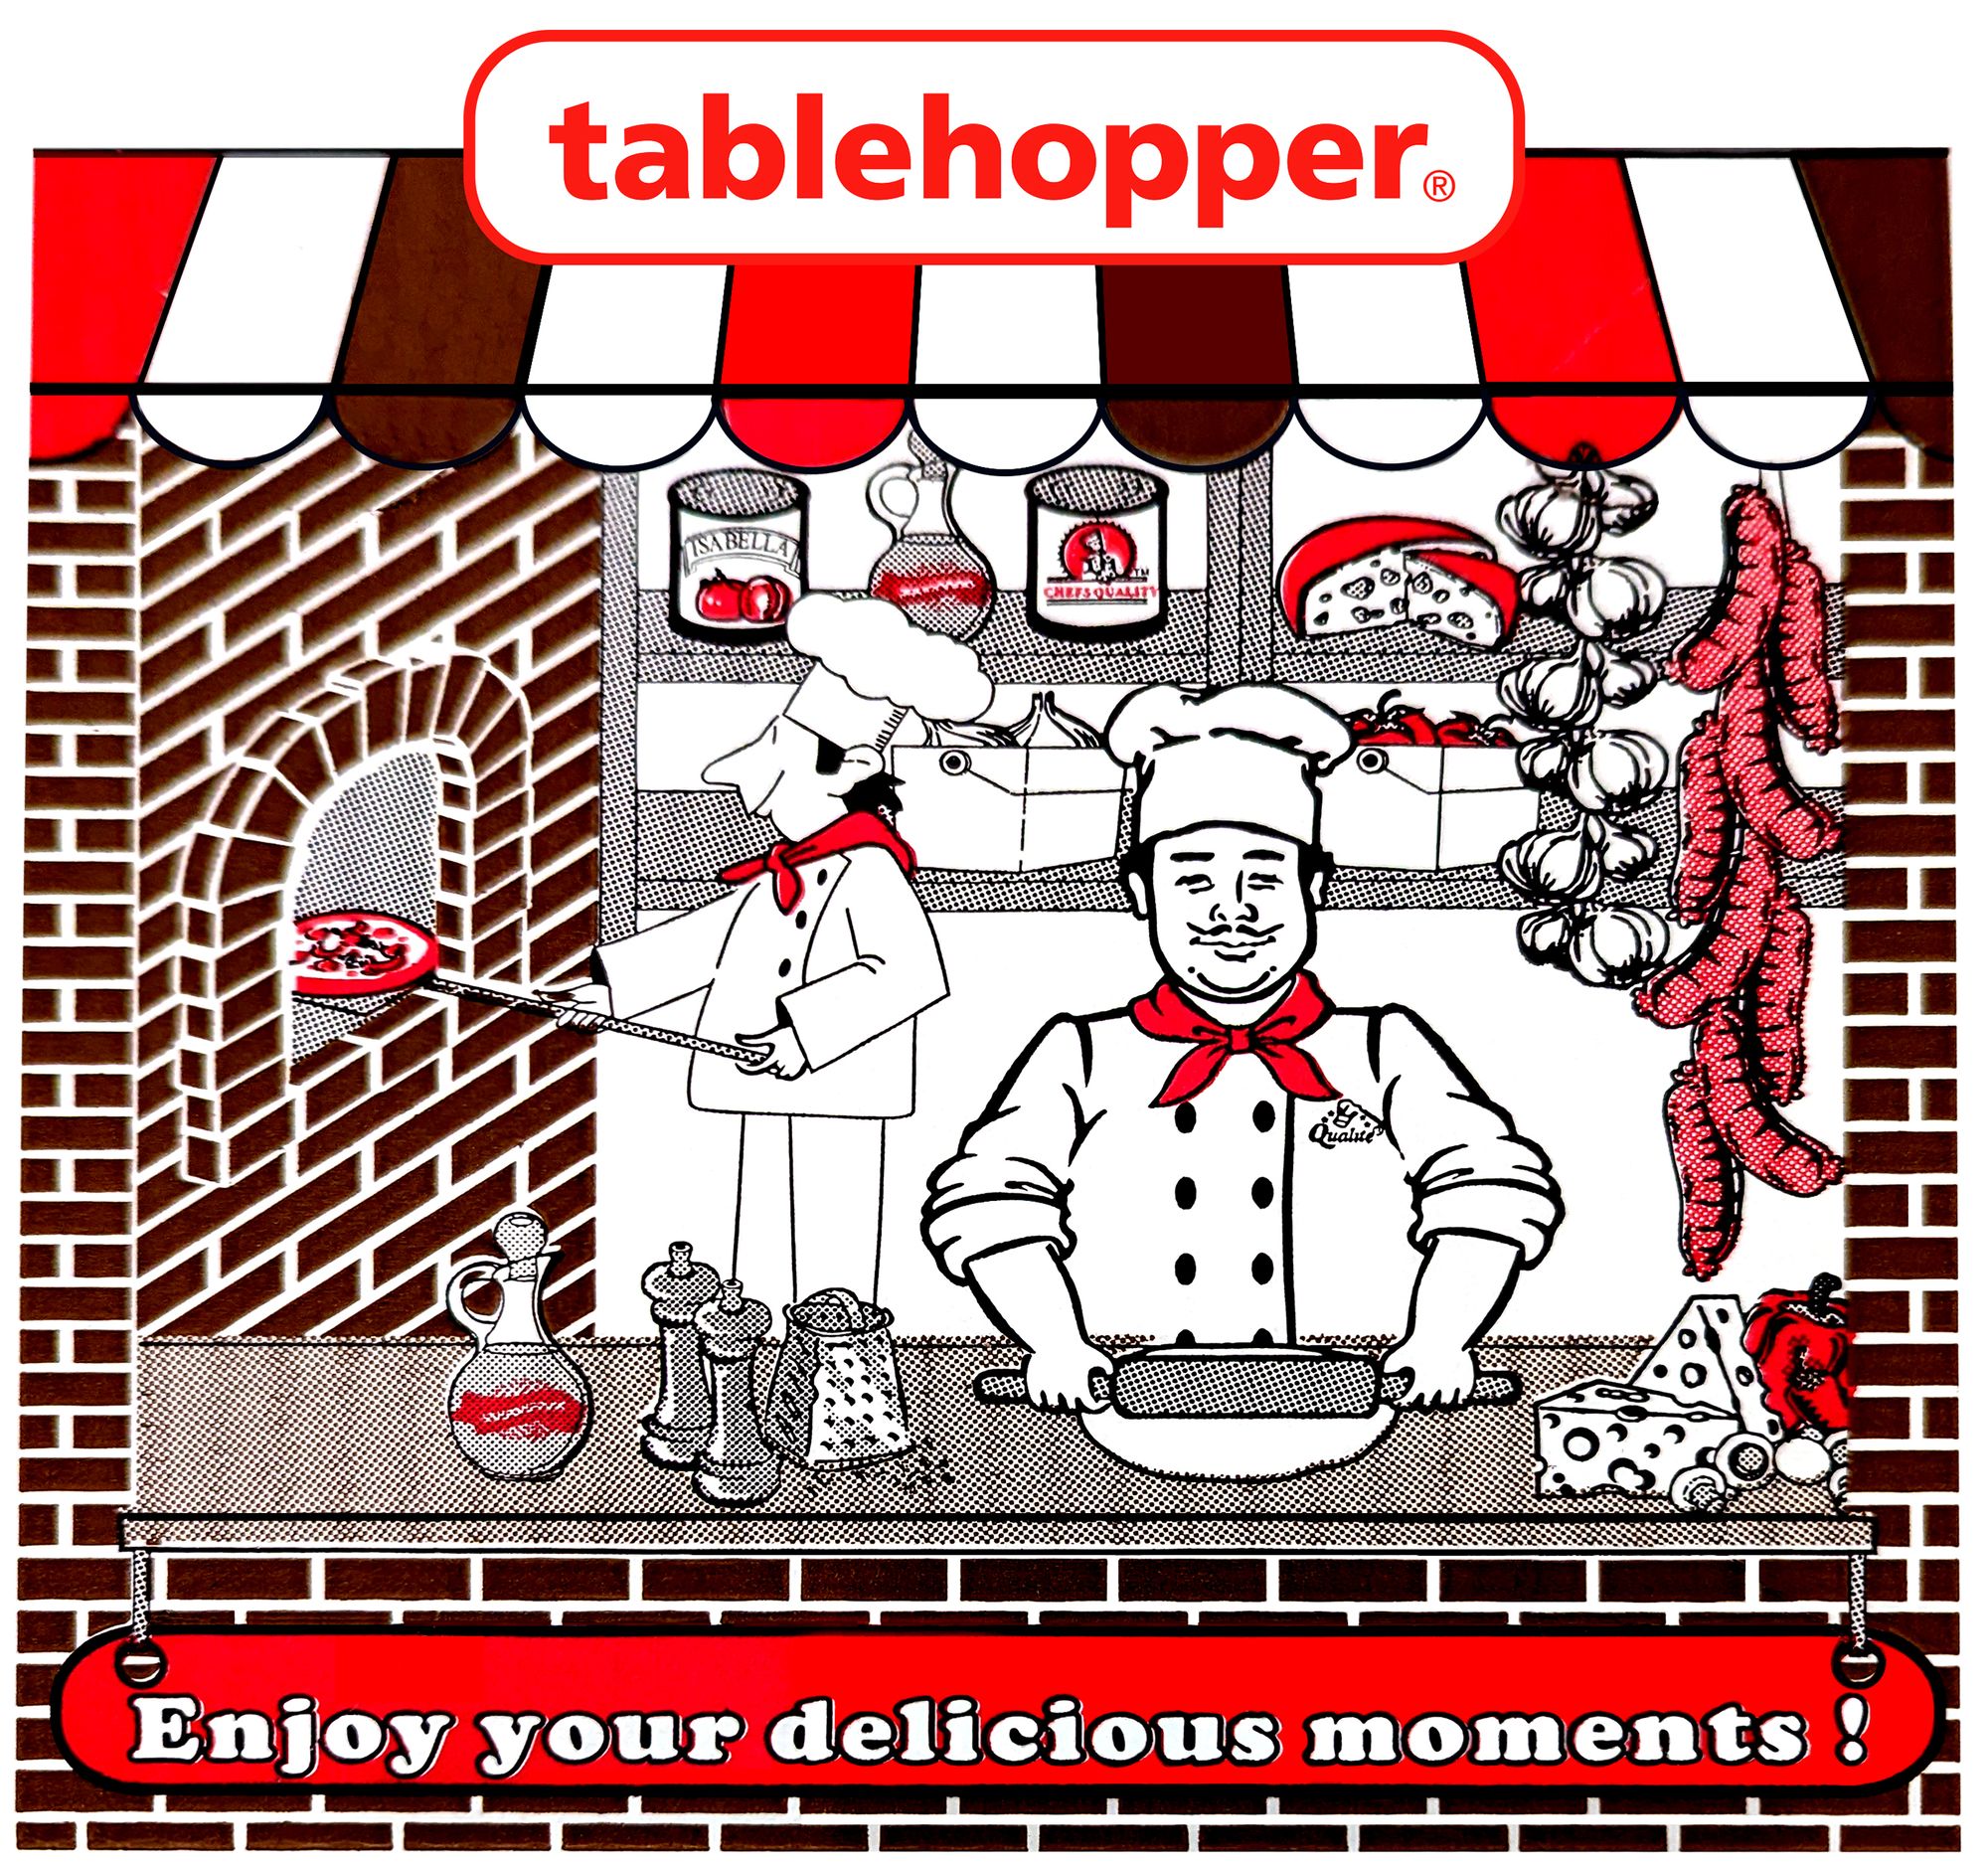 tableHopper_delicious.jpg